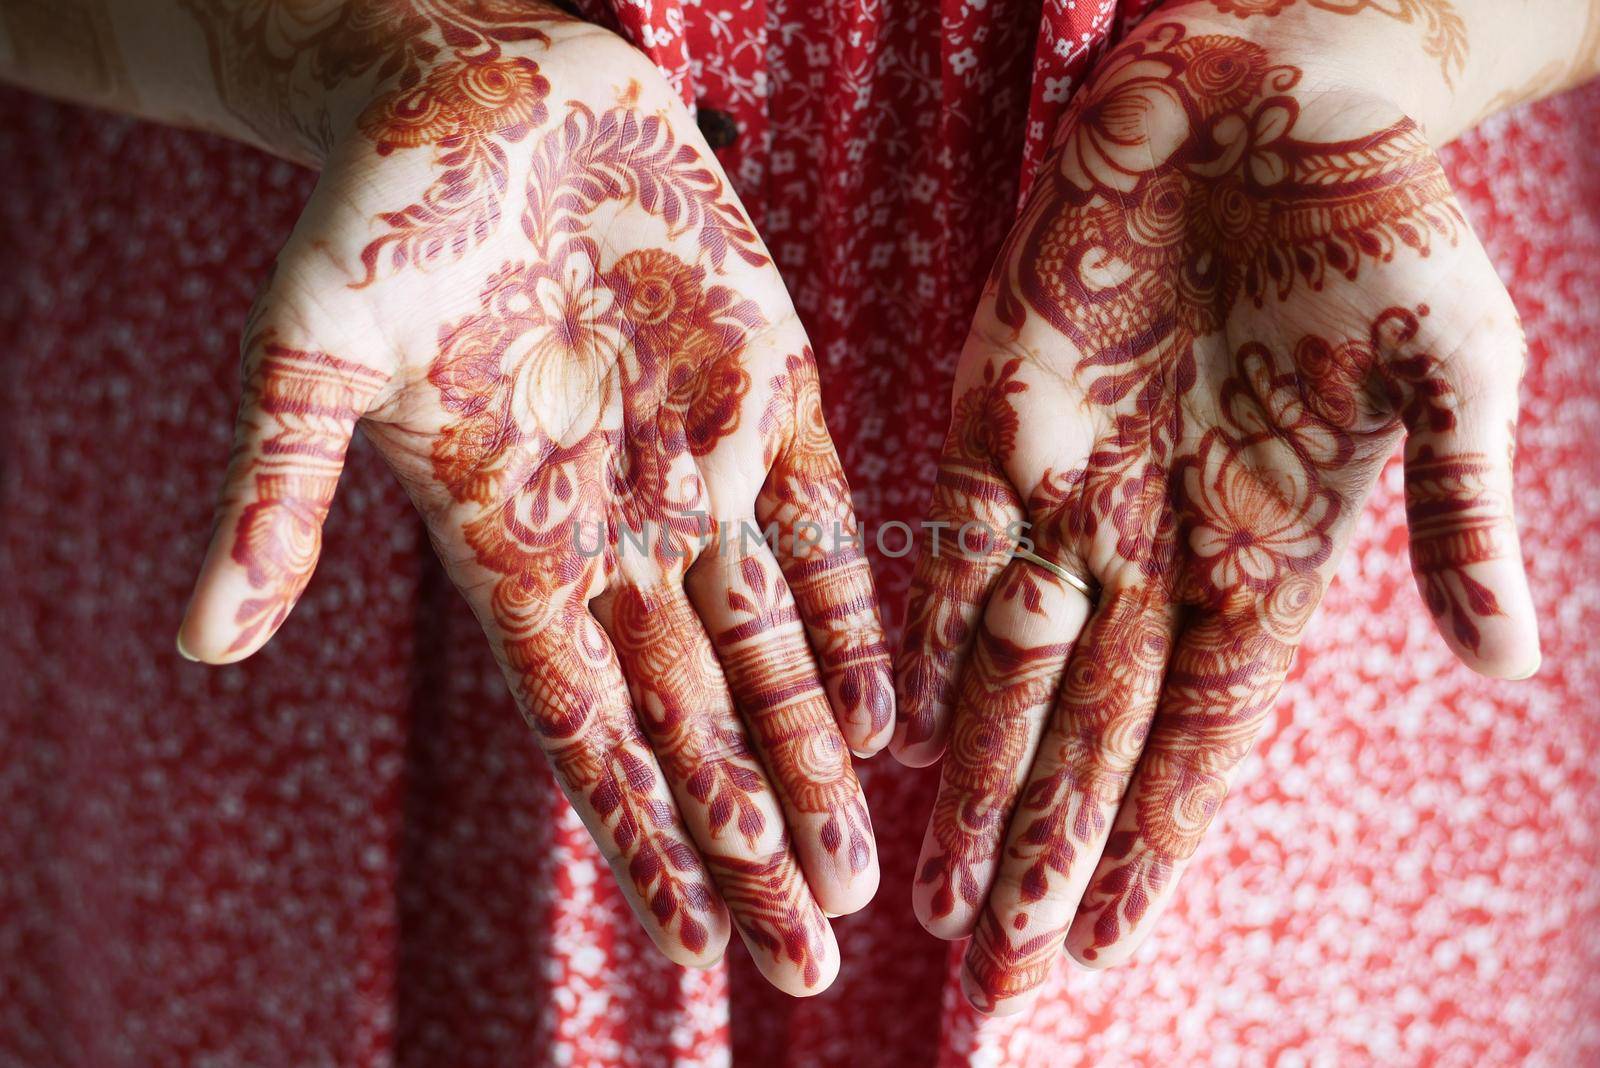 women applying henna on hand .